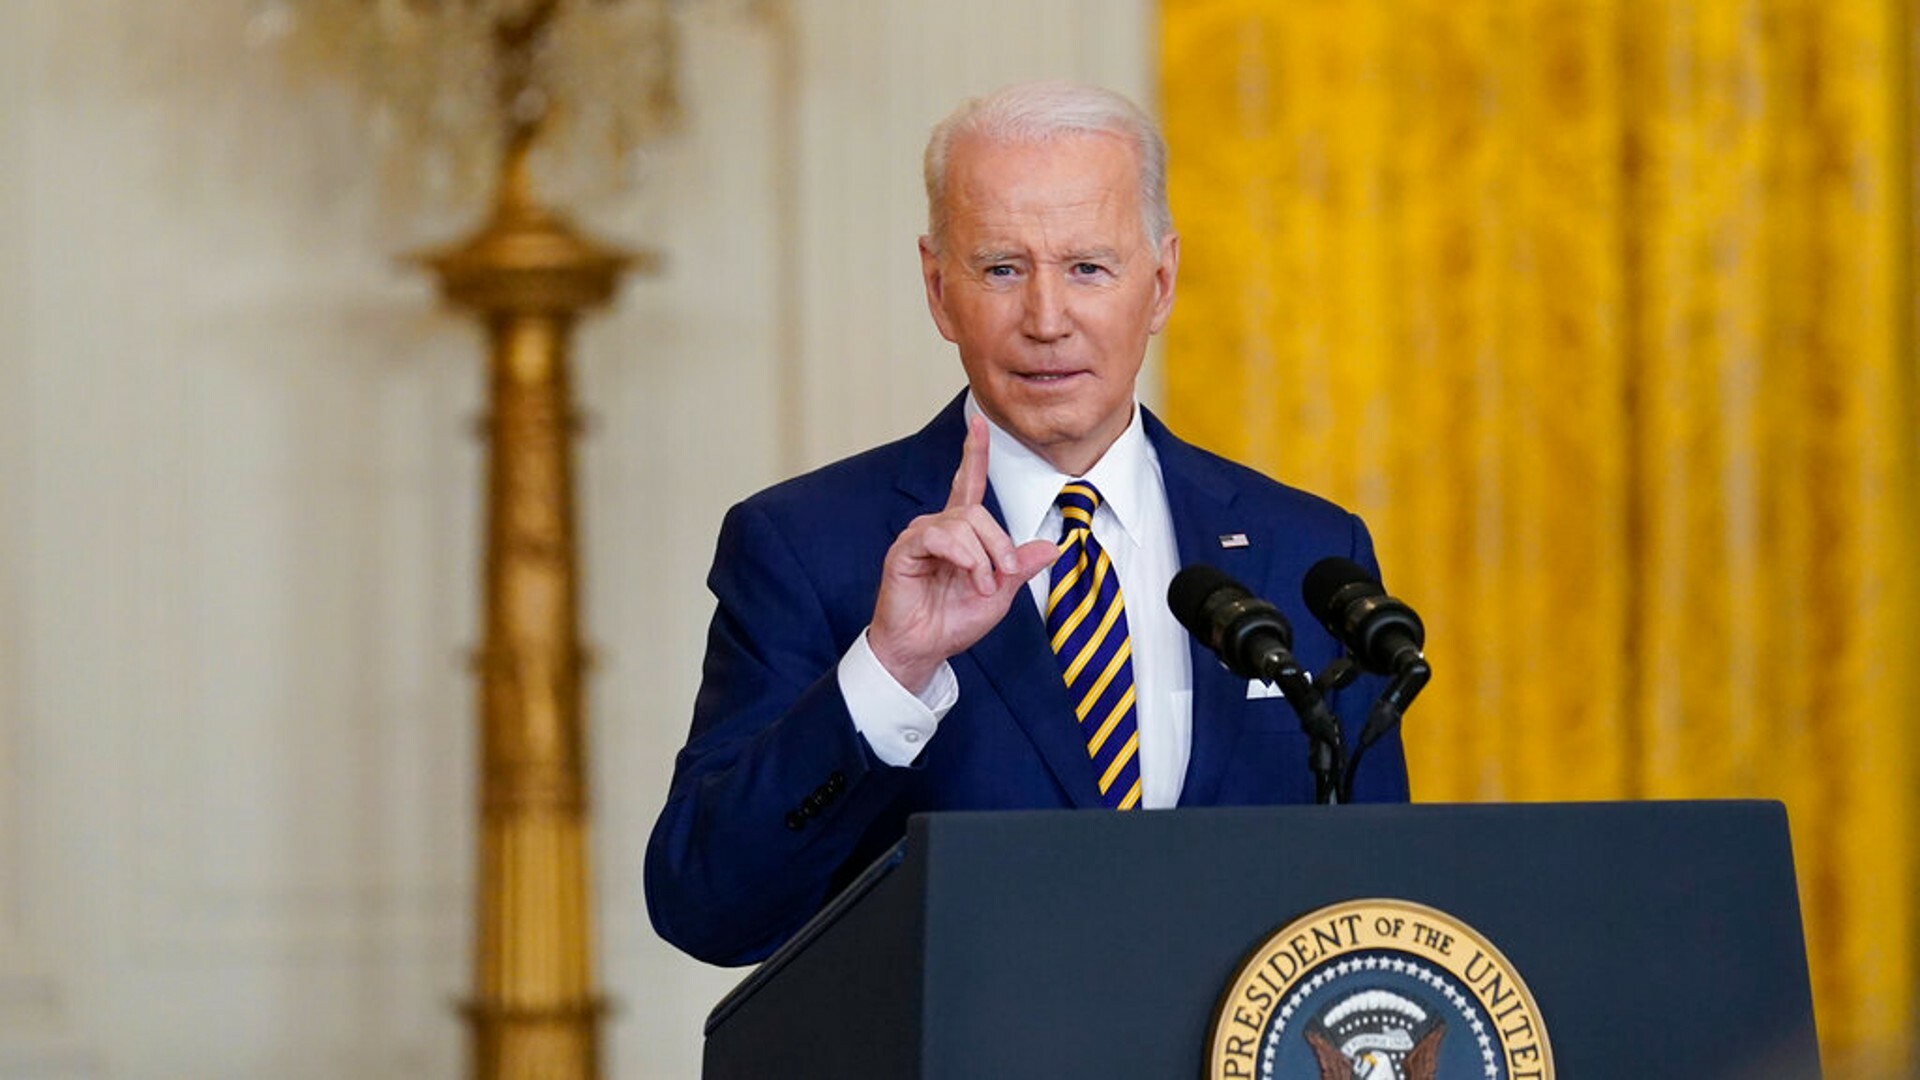 Joe Biden: One of the most recognizable figures in American politics. 1920x1080 Full HD Background.